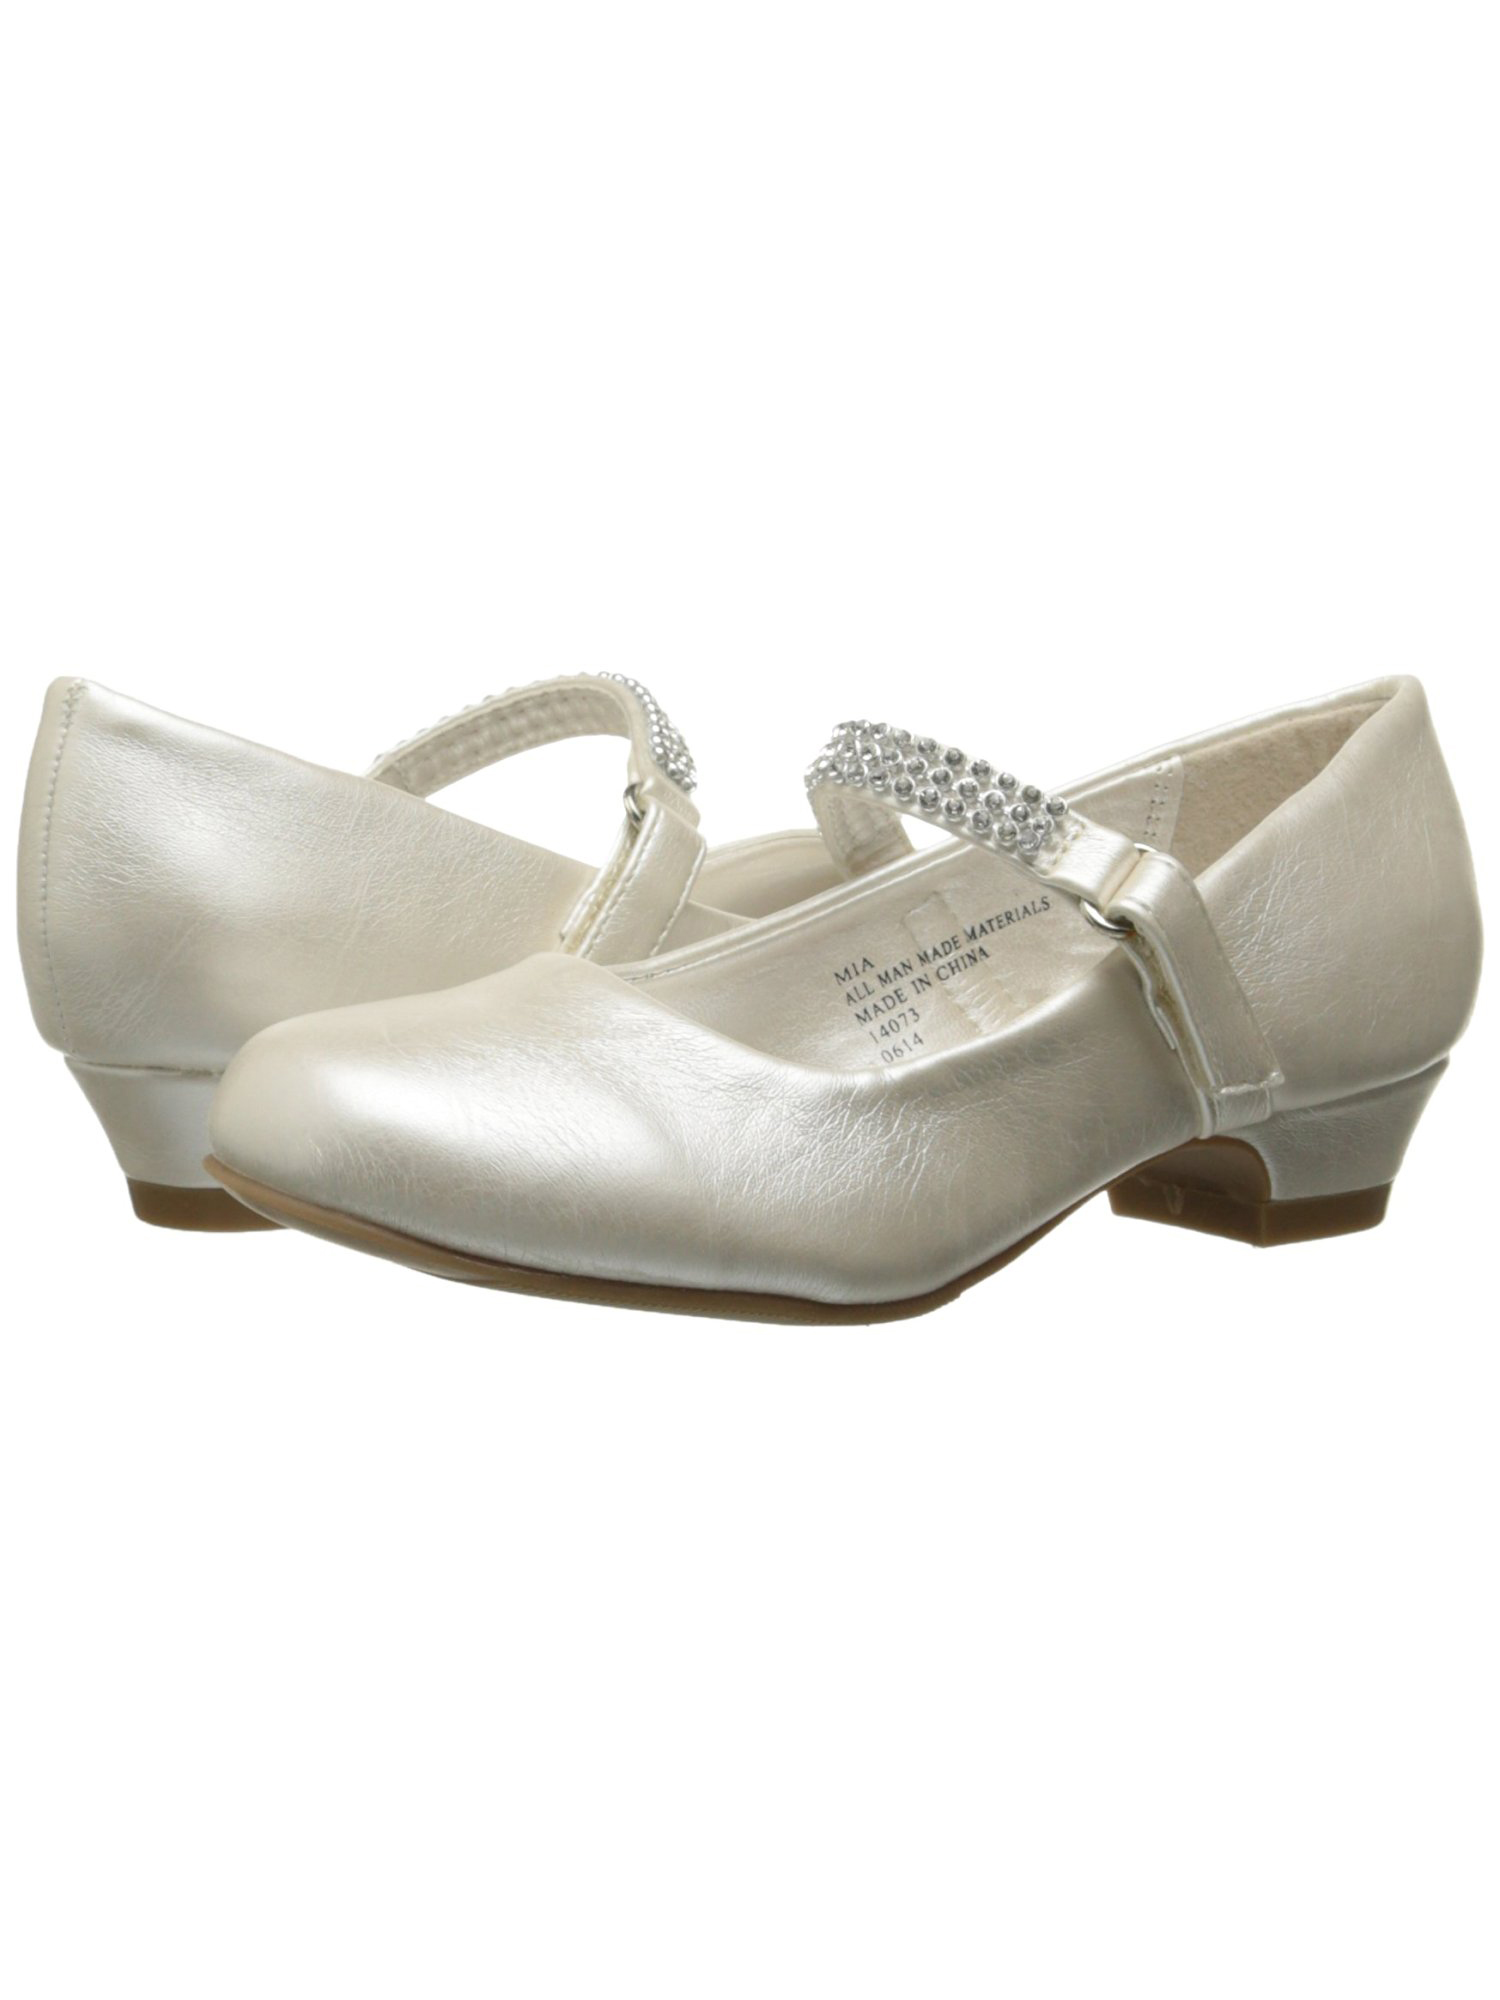 Girls Low Heel Dress Shoe With Rhinestone Strap (12, White)